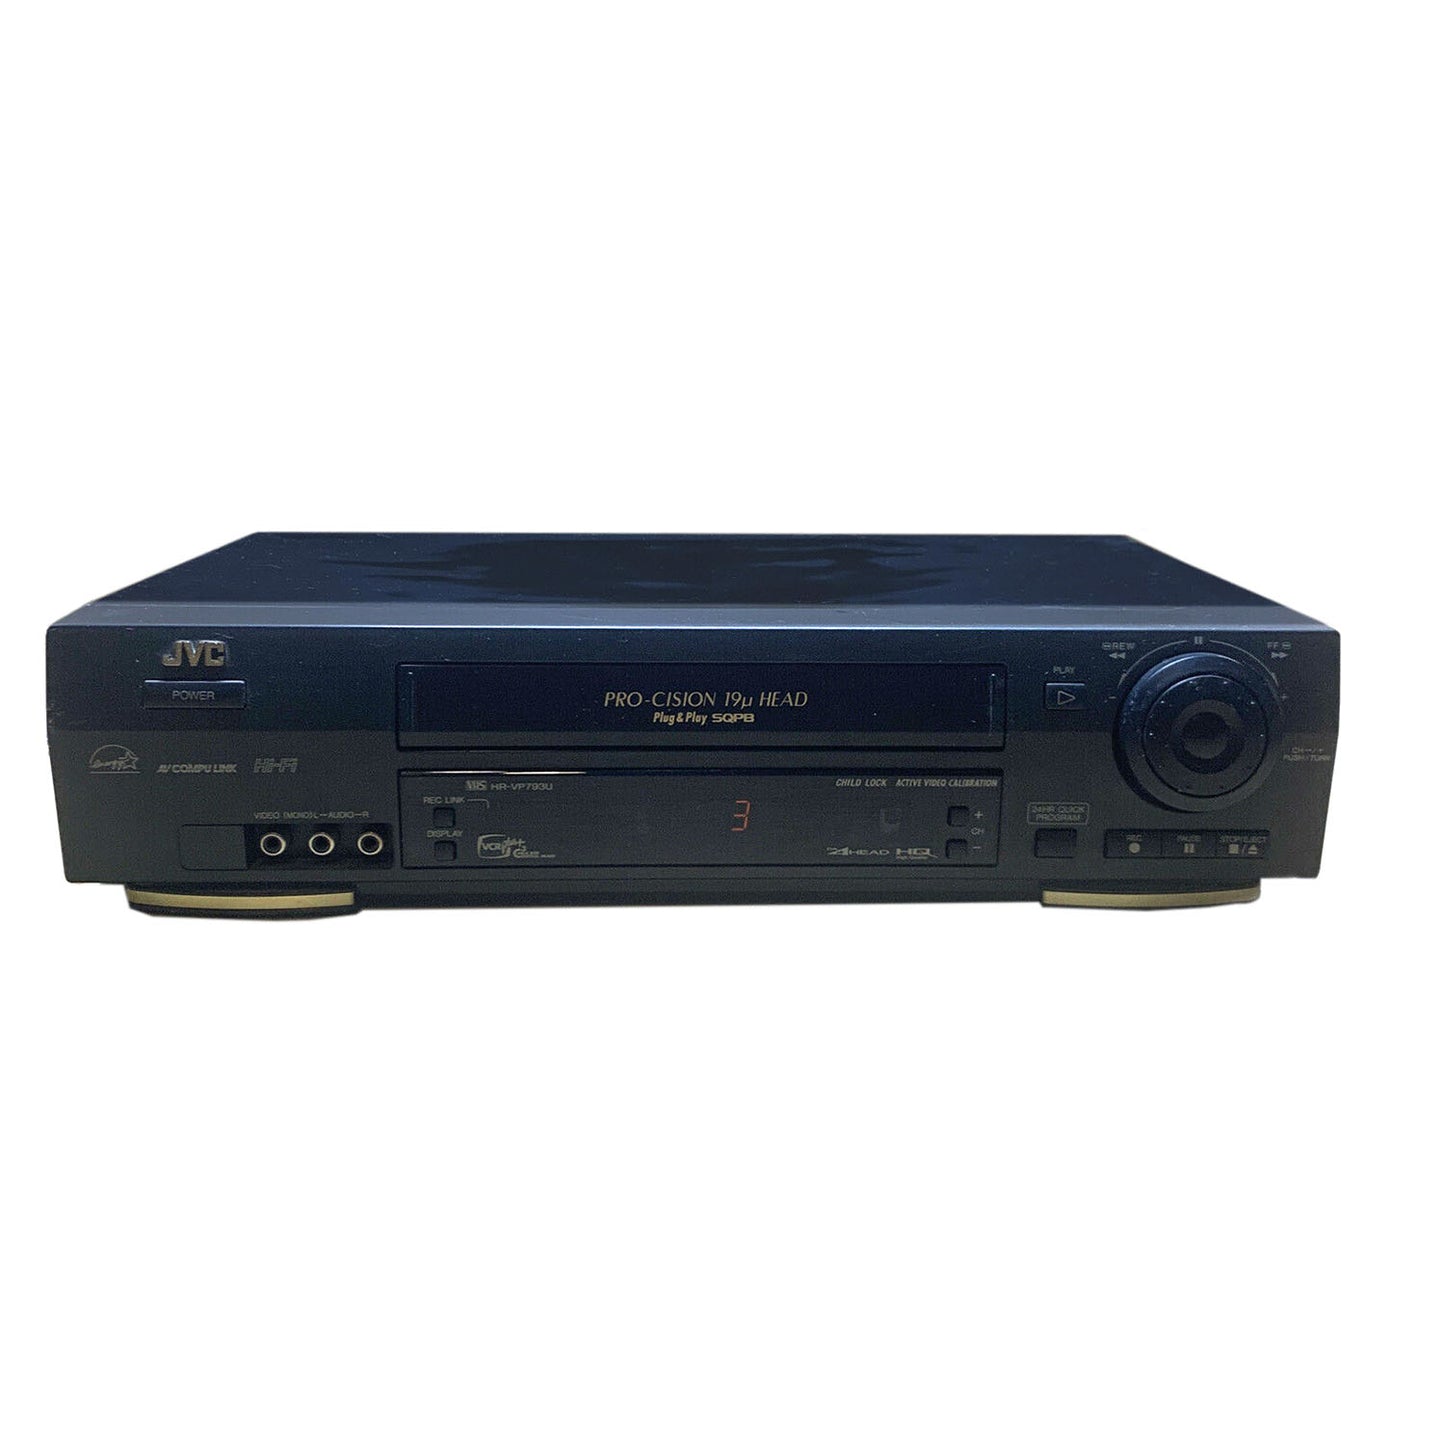 JVC HR-VP793U VCR, 4-Head Hi-Fi Stereo